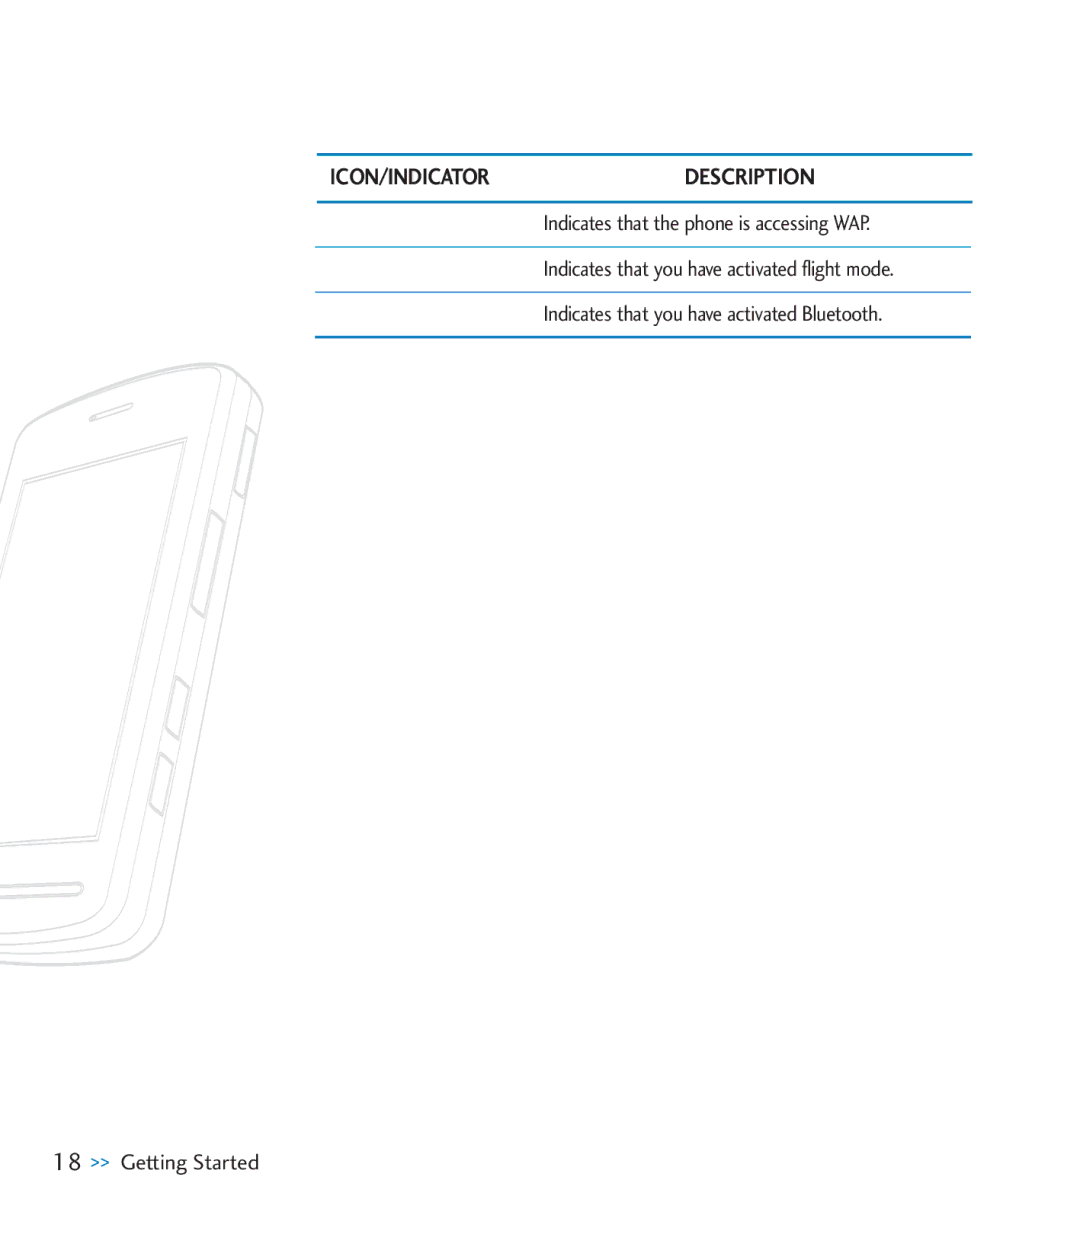 LG Electronics CU920 manual Icon/Indicatordescription 